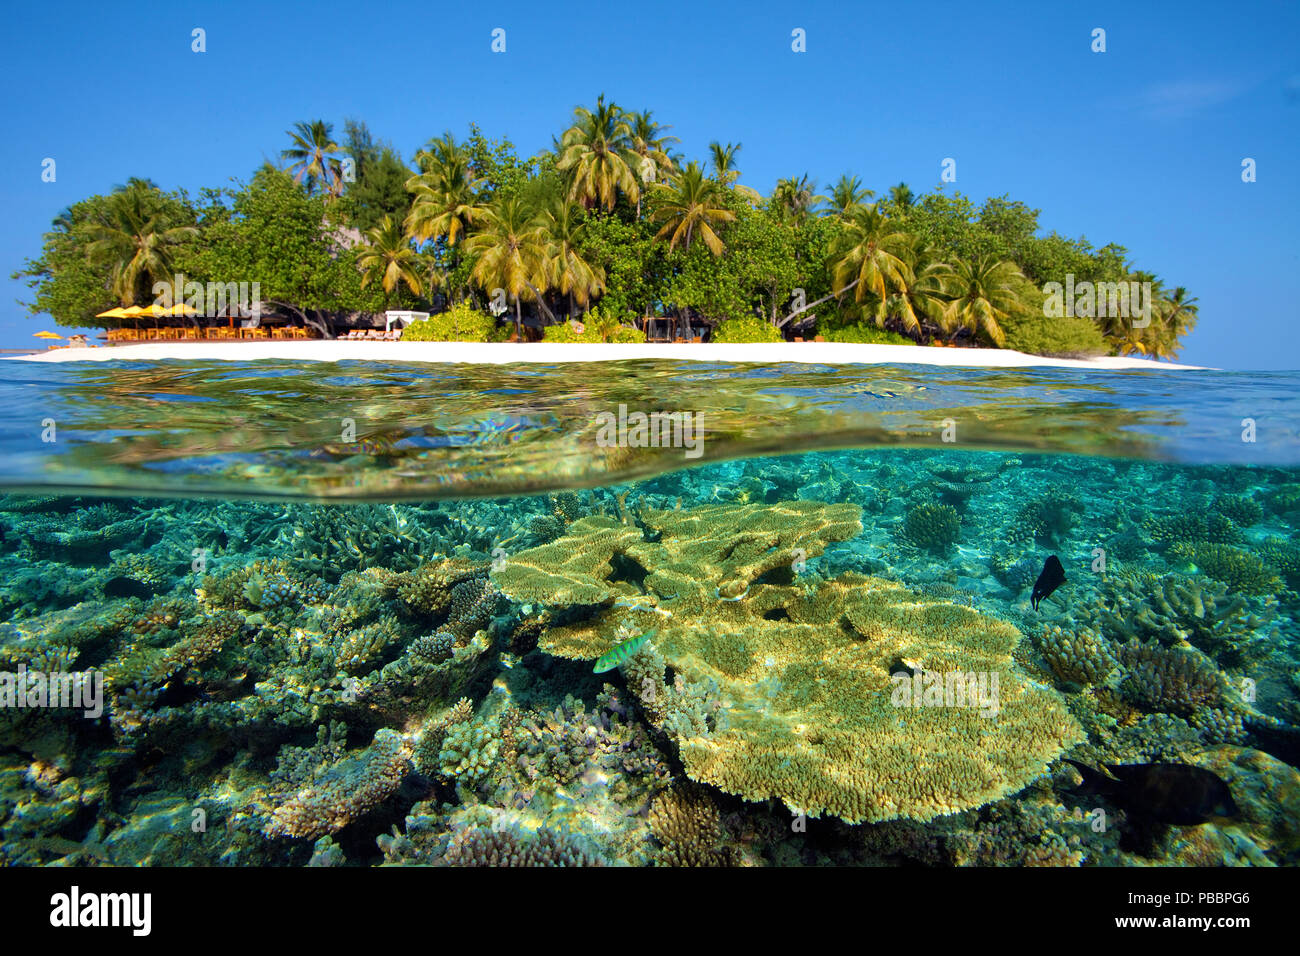 Coral reef at Angsana island (former name Ihuru island), split image, North-Male Atoll, Maldive islands Stock Photo